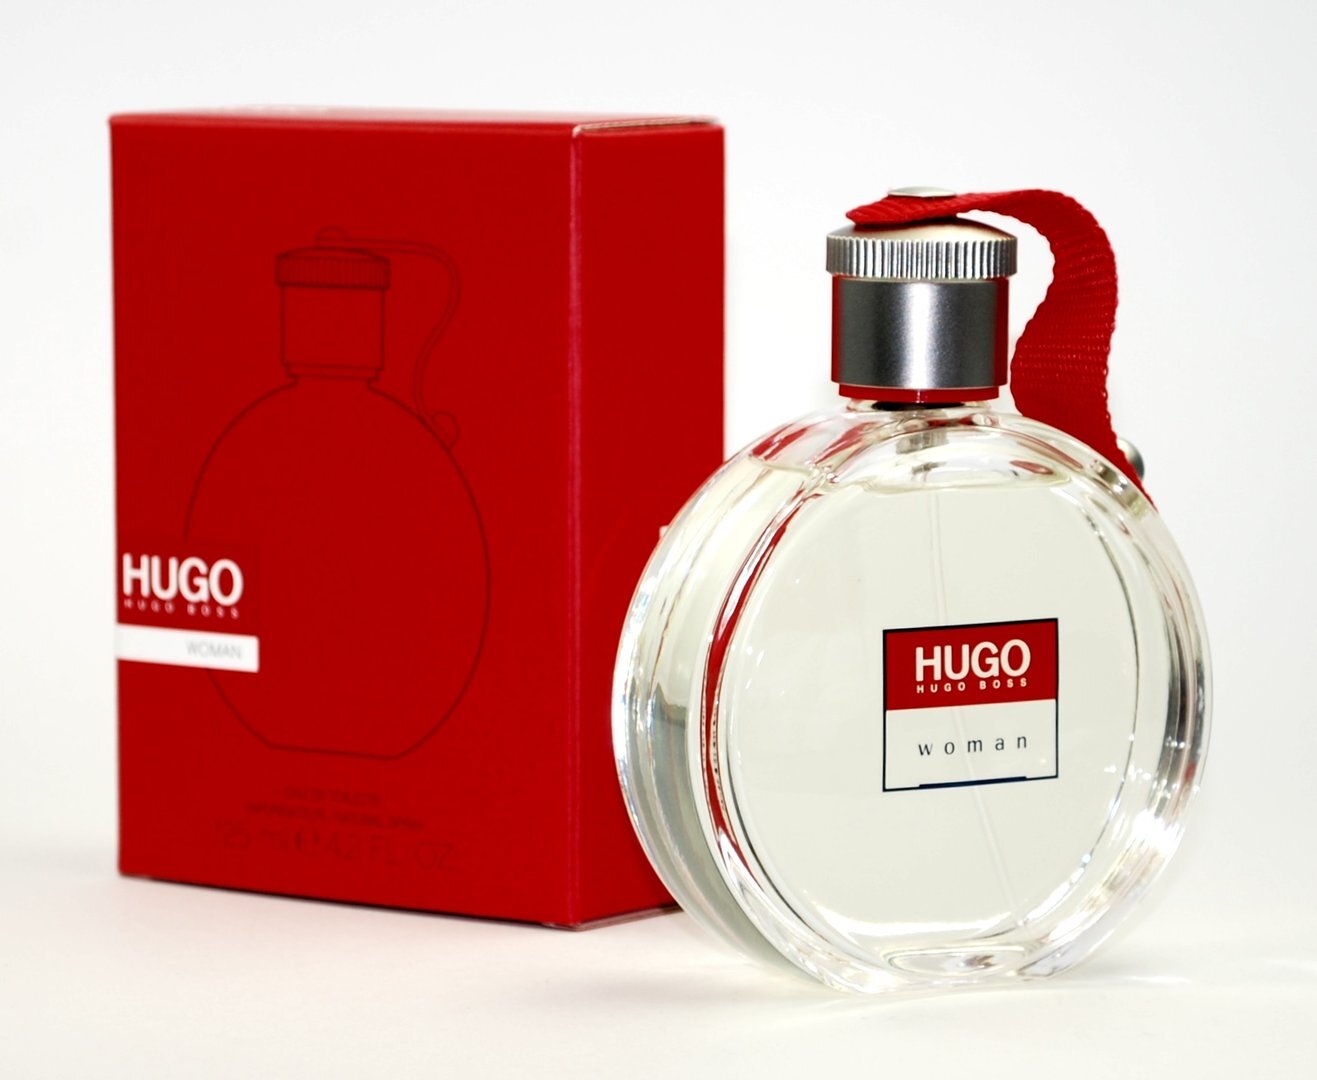 Hugo Boss Woman eau de parfum / 50 dames parfum kopen? | Kieskeurig.be | helpt je kiezen